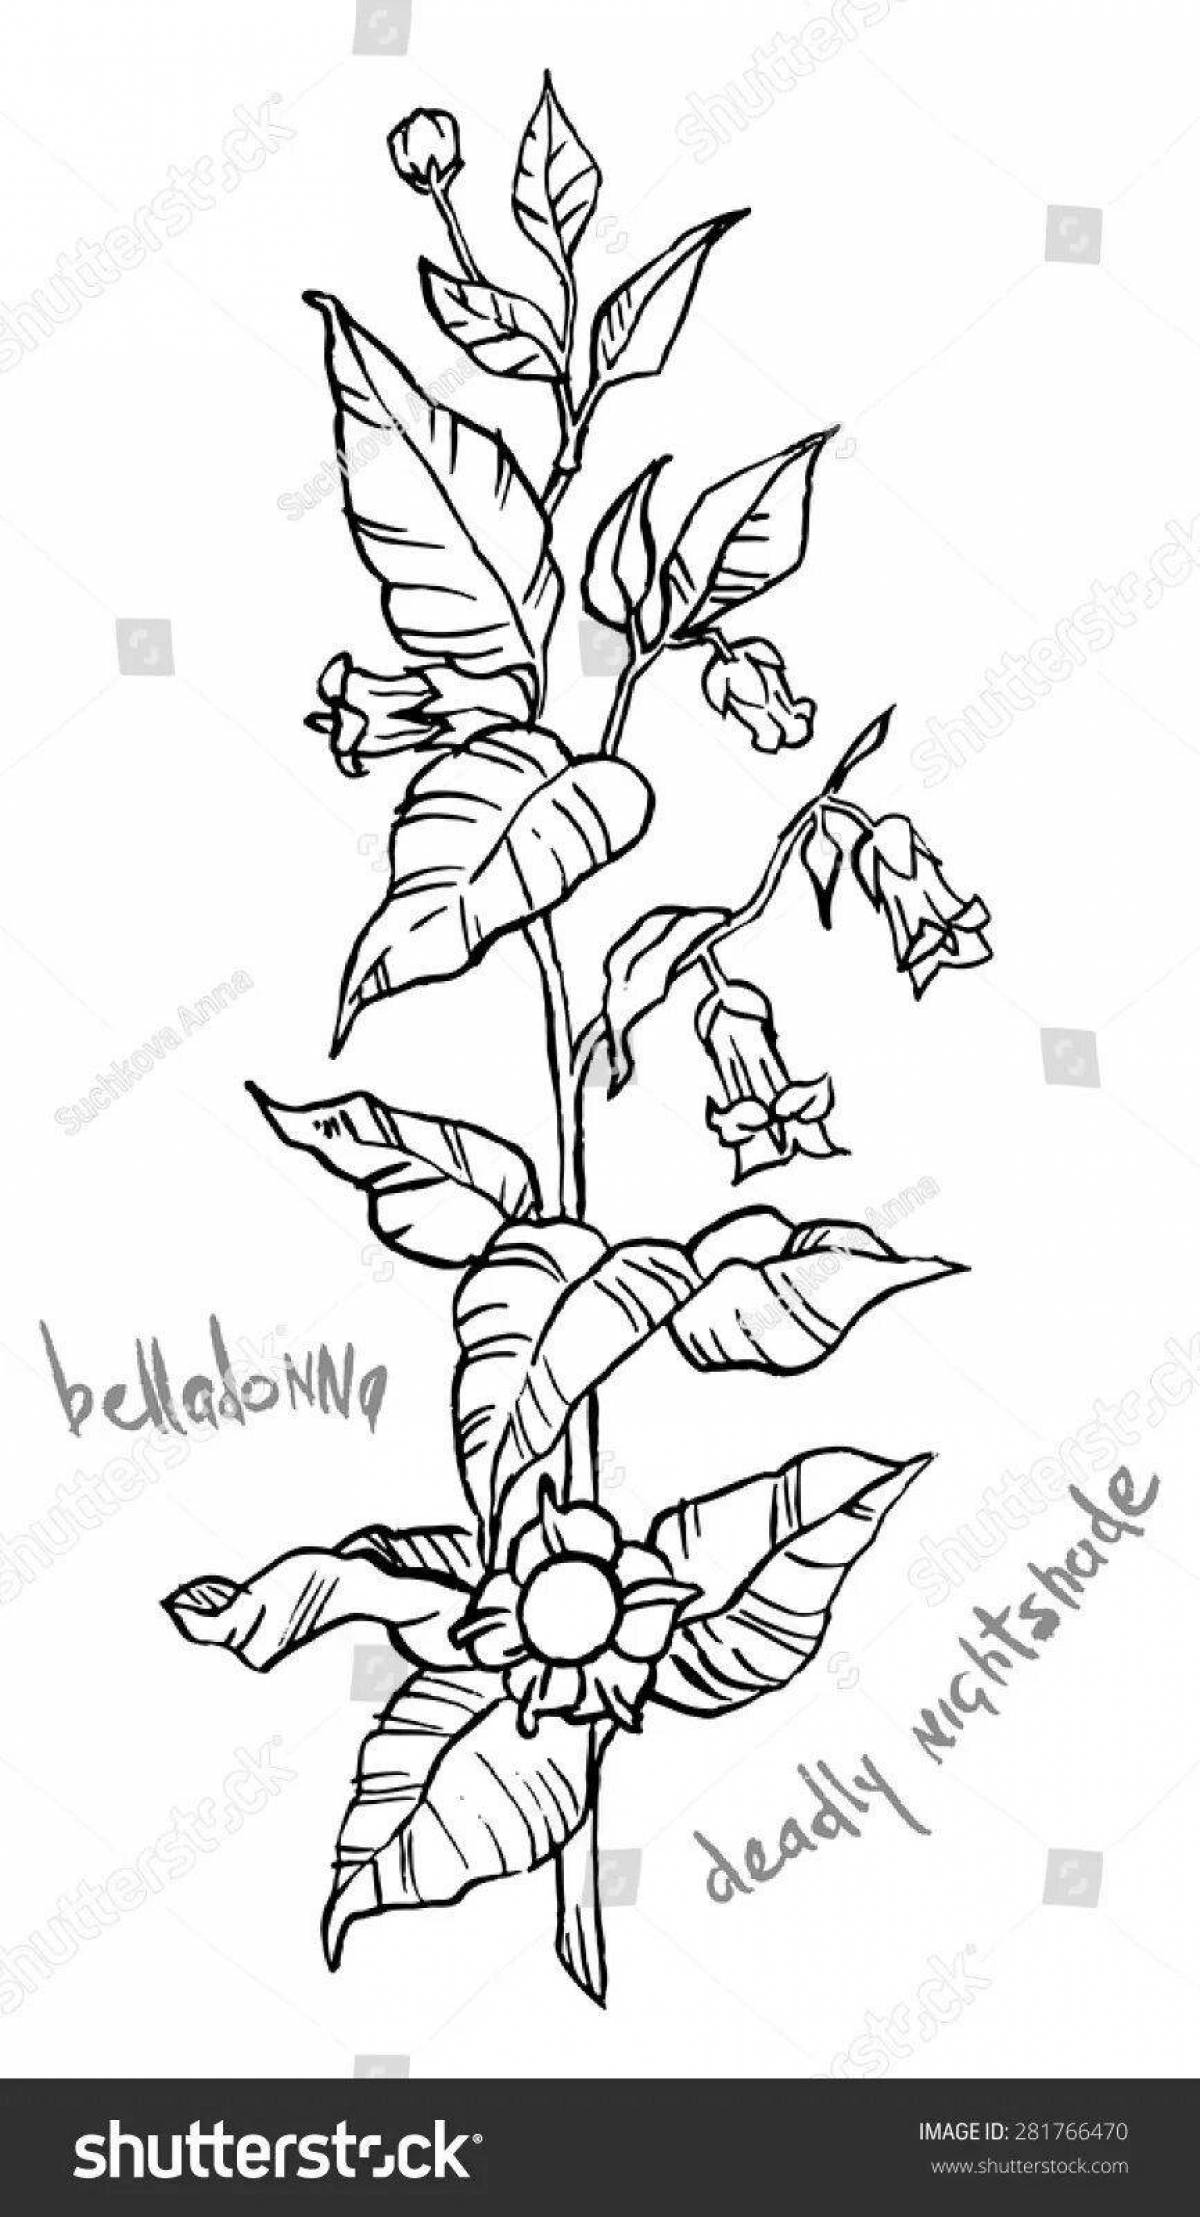 Large belladonna coloring page